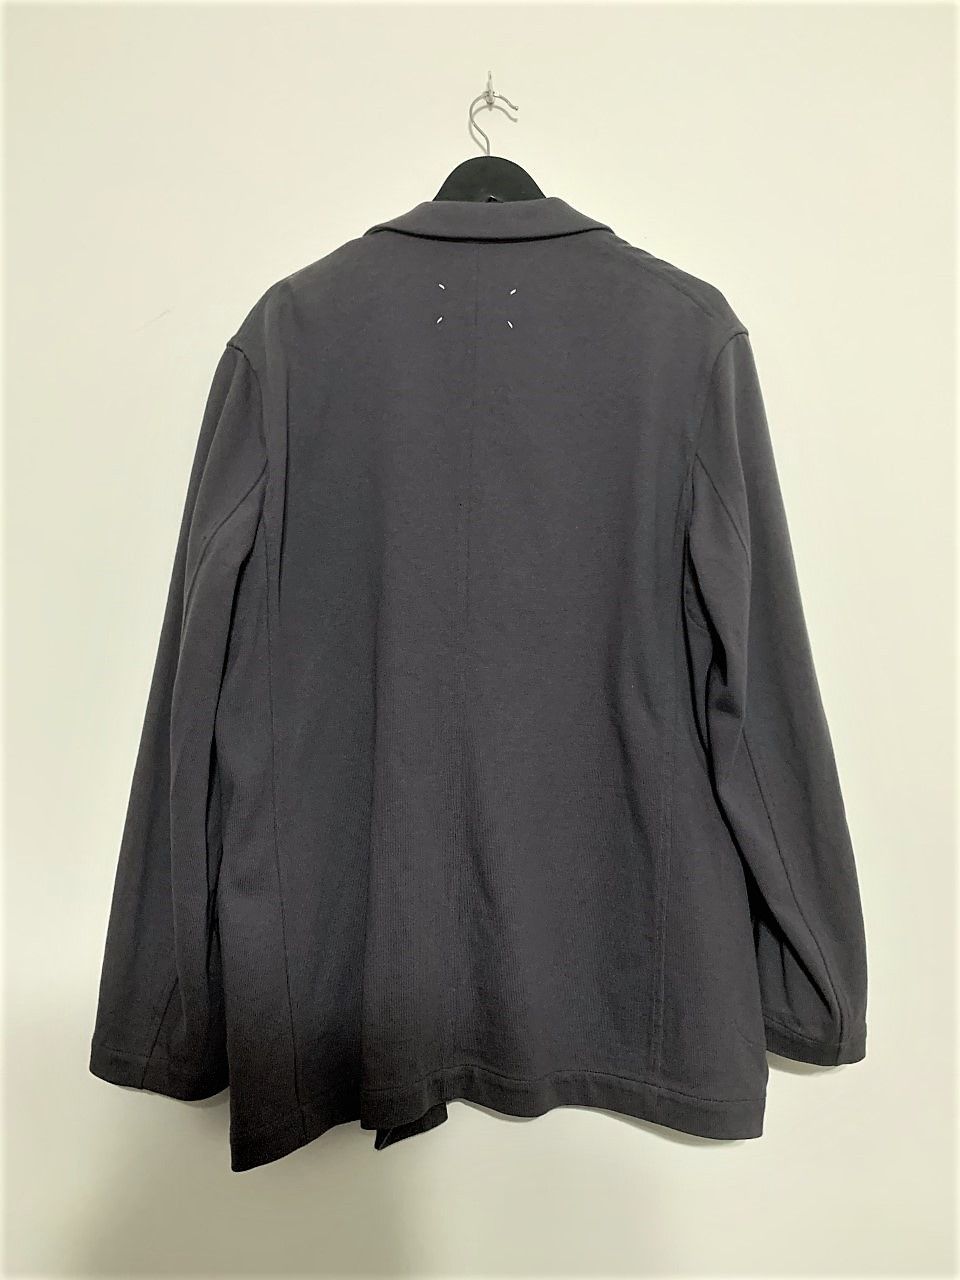 Maison Margiela Reversible Jersey Blazer Size US M / EU 48-50 / 2 - 5 Thumbnail